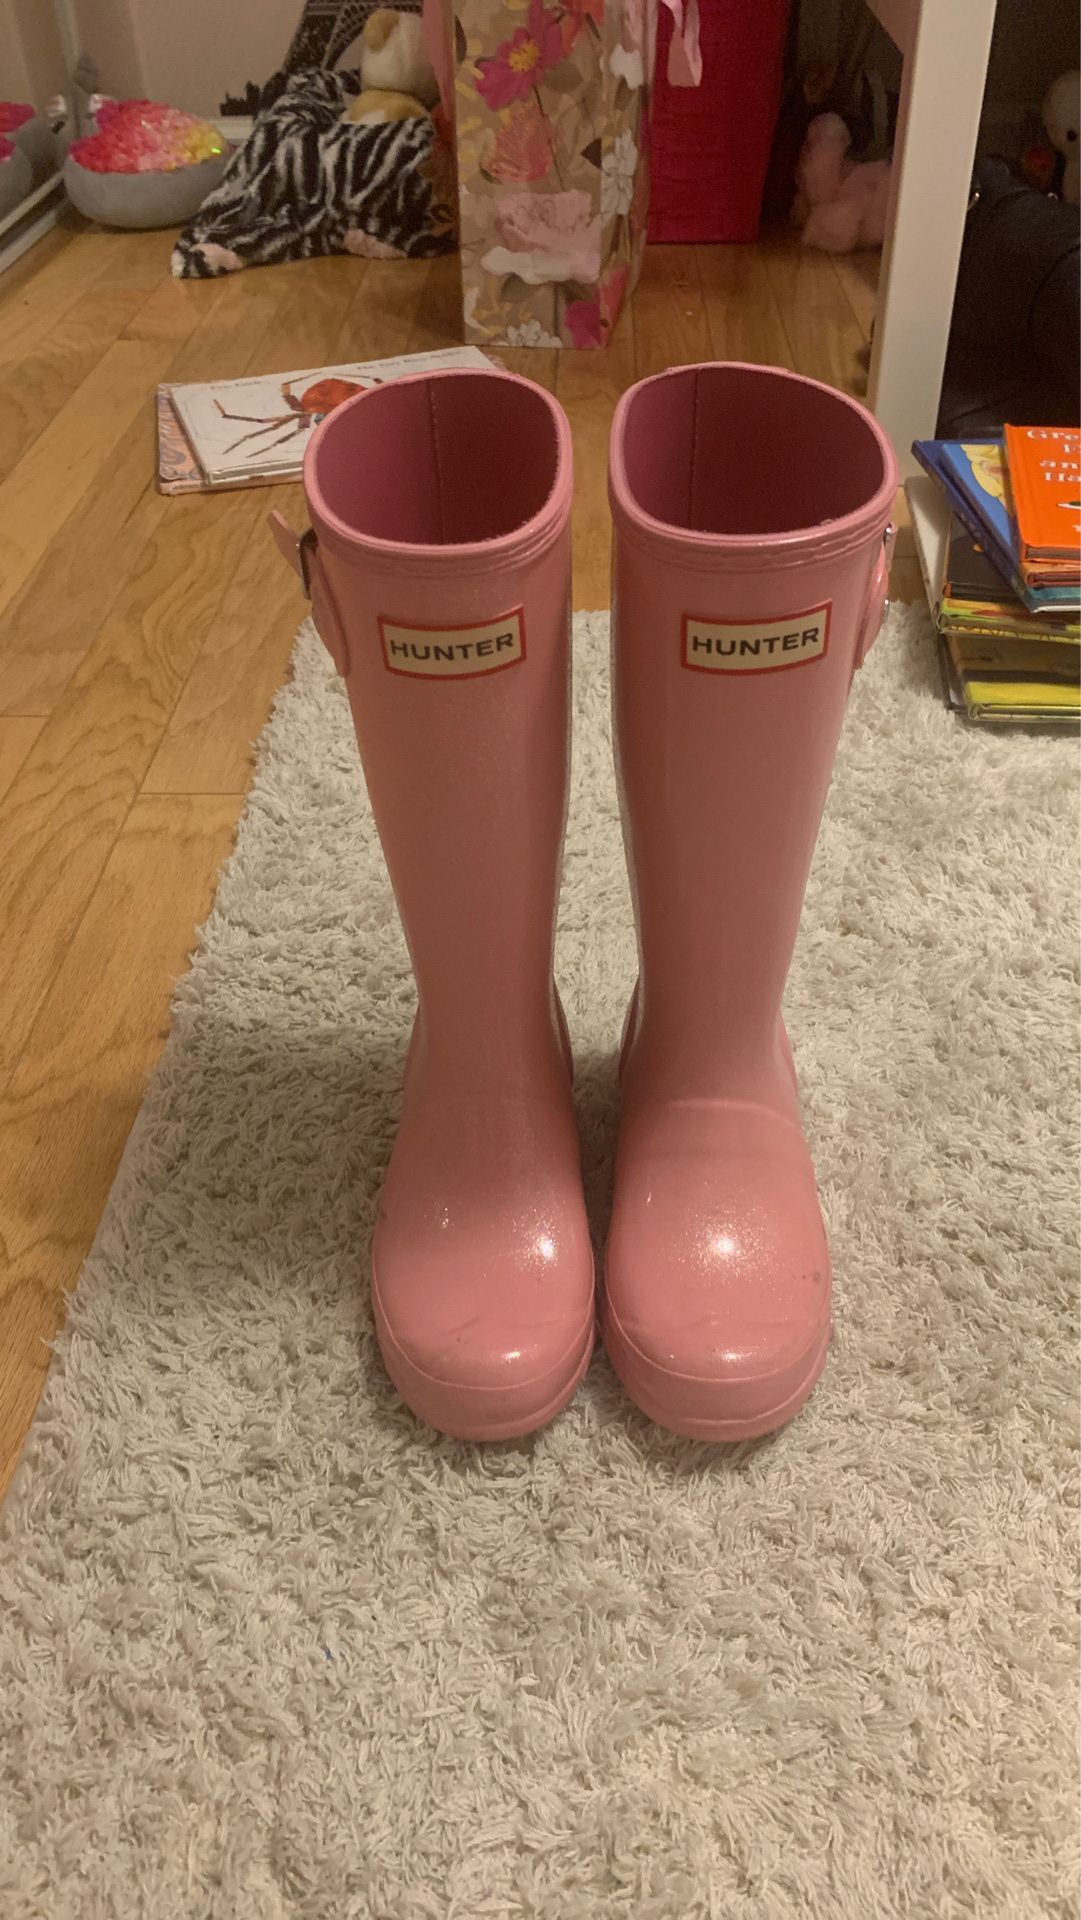 Girls size 1 hunter boots